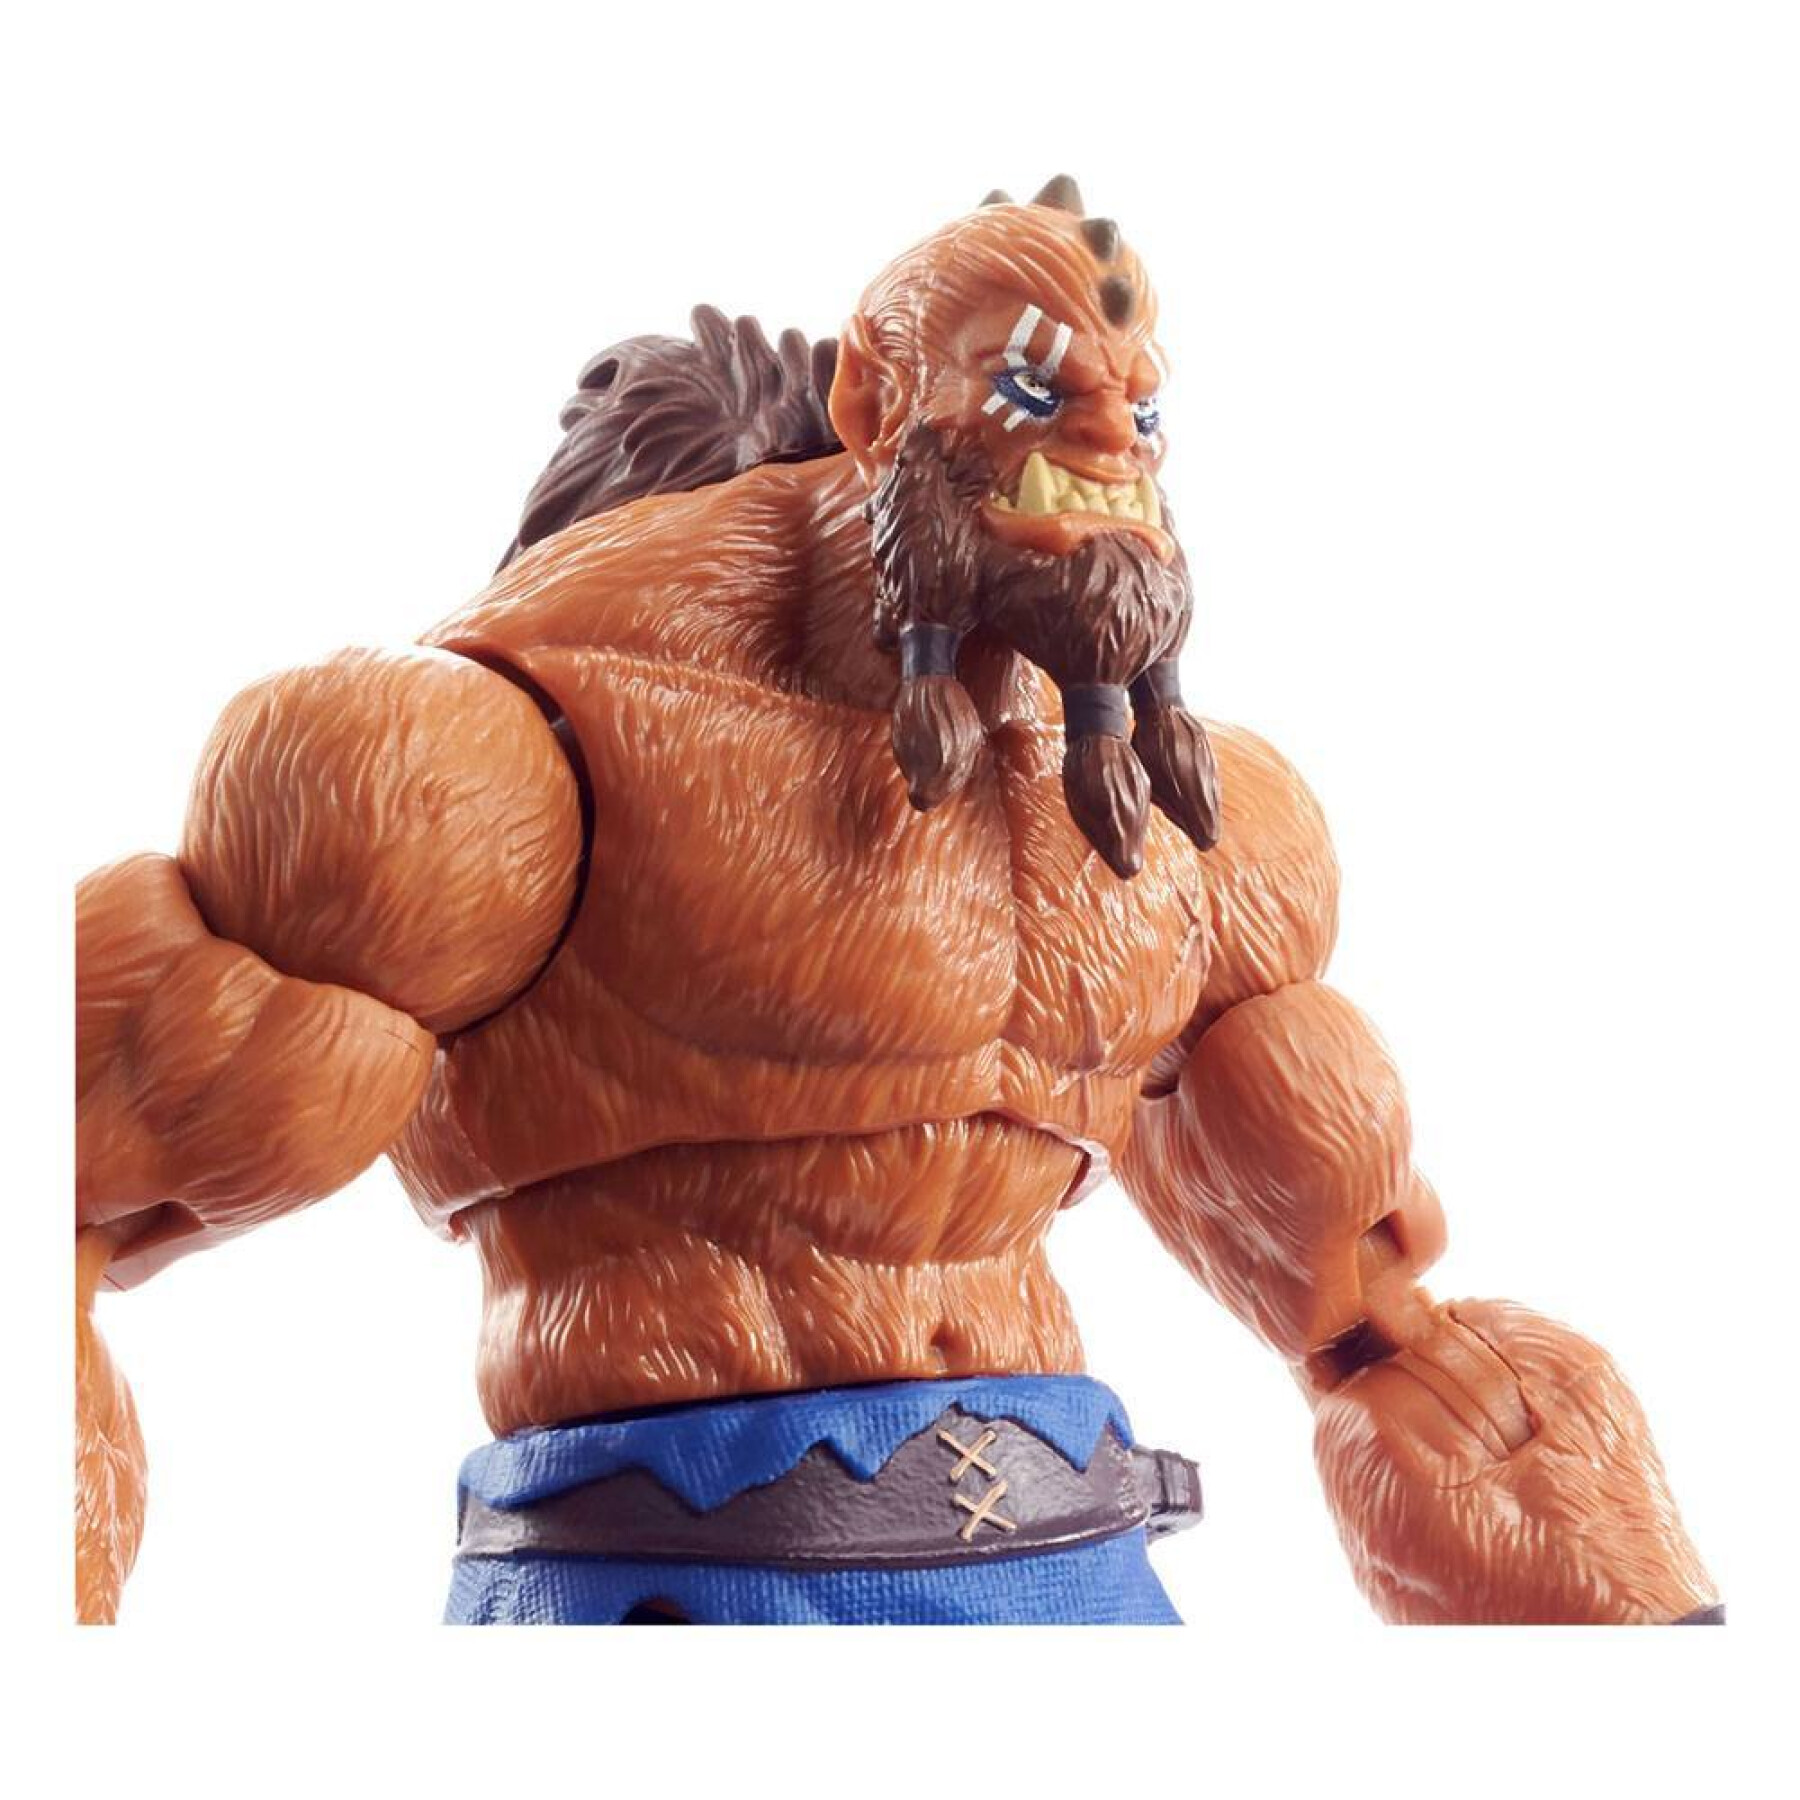 Figurine Mattel Masters Of The Universe: Revelation Masterverse 2021 Beast Man